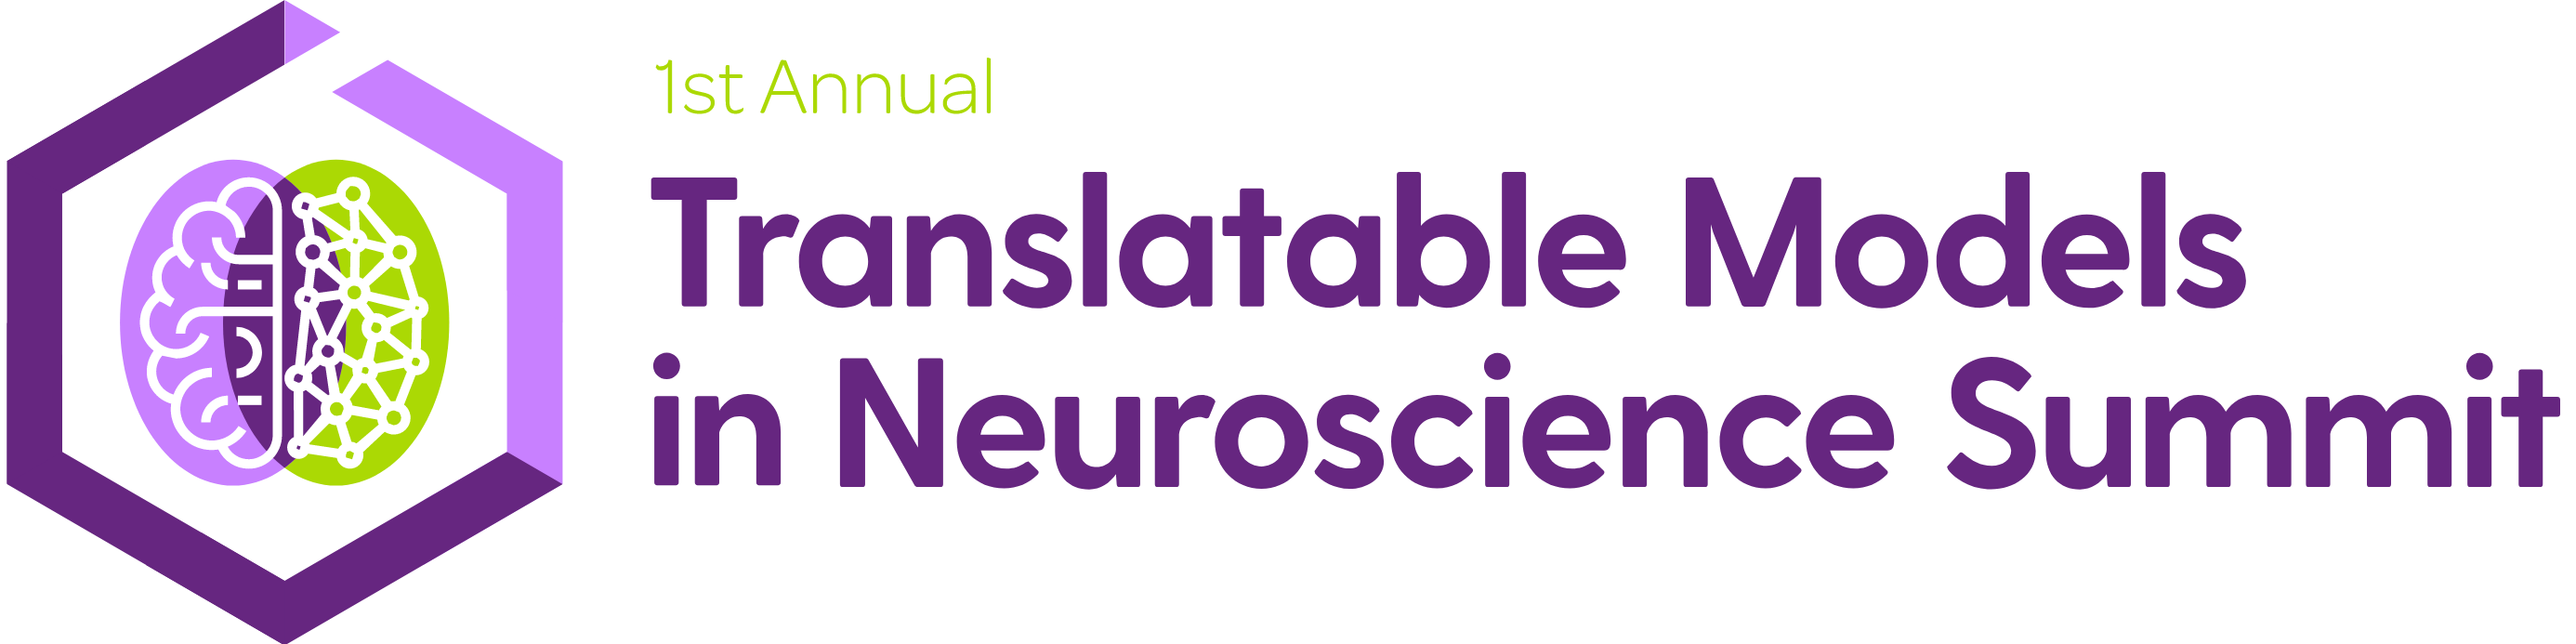 5756_Translatable_Models_in_Neuroscience_Logo (2)